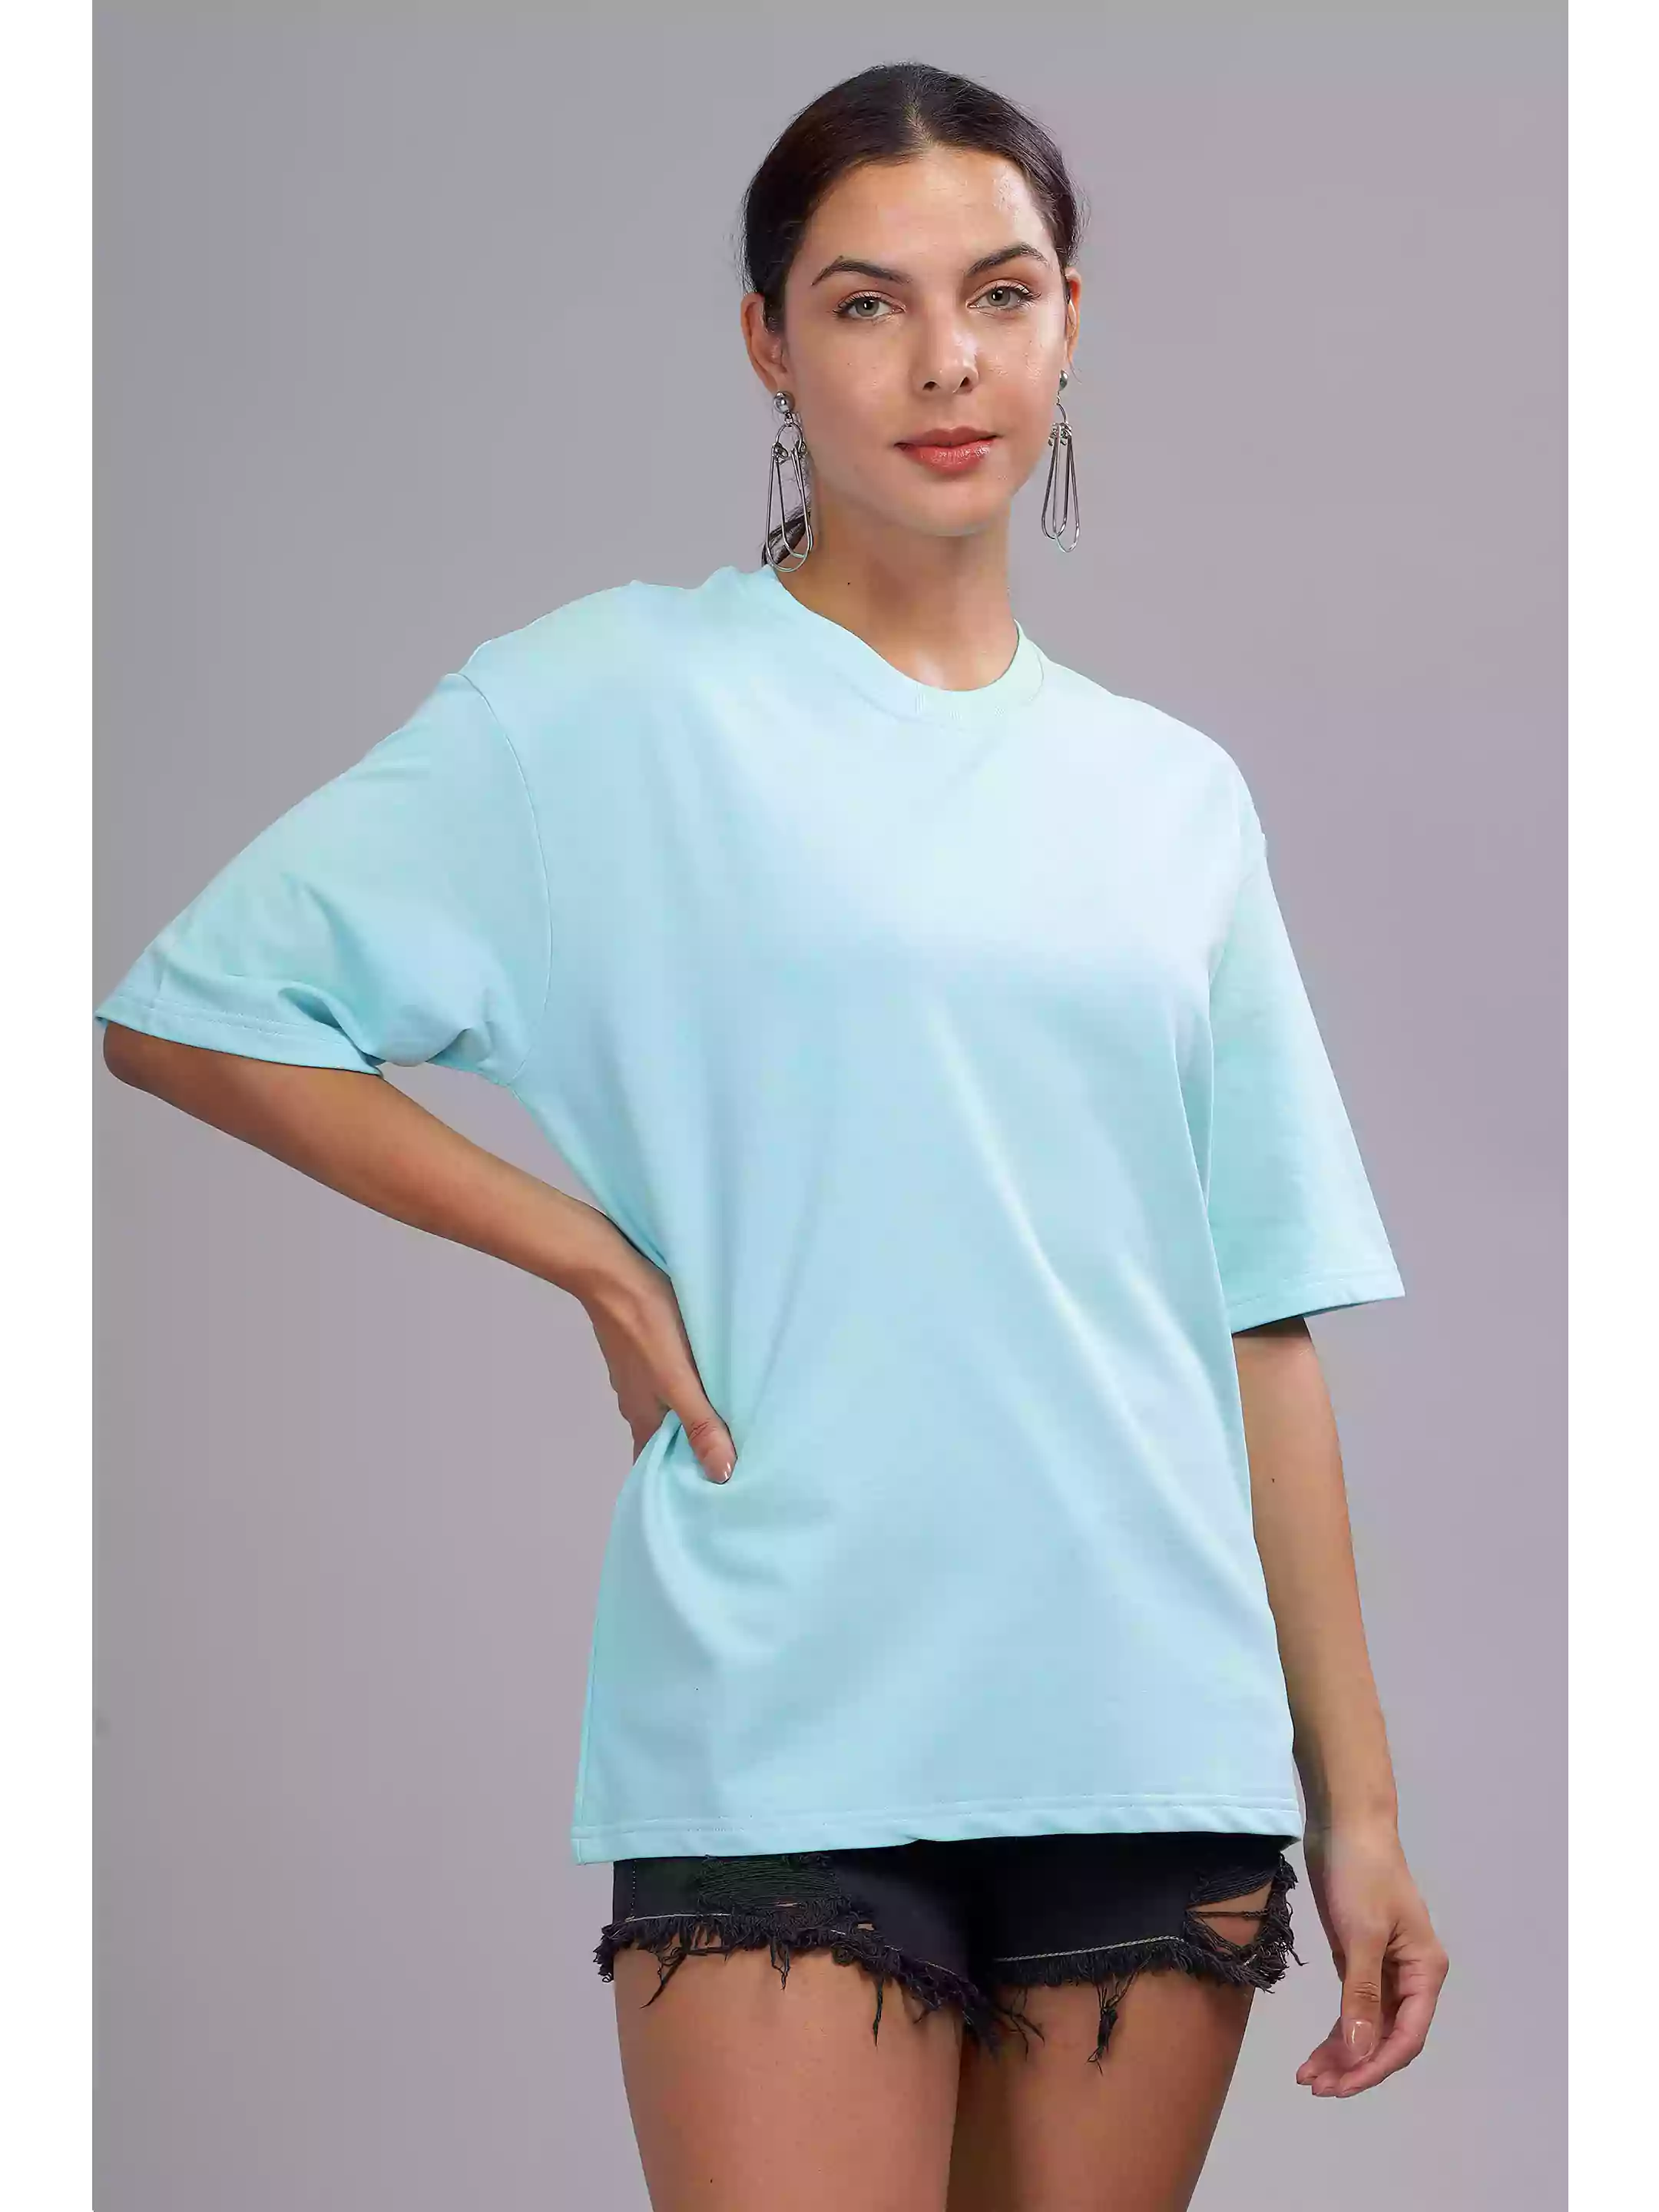 Solid Light Blue Over sized - Sukhiaatma Unisex T-shirt